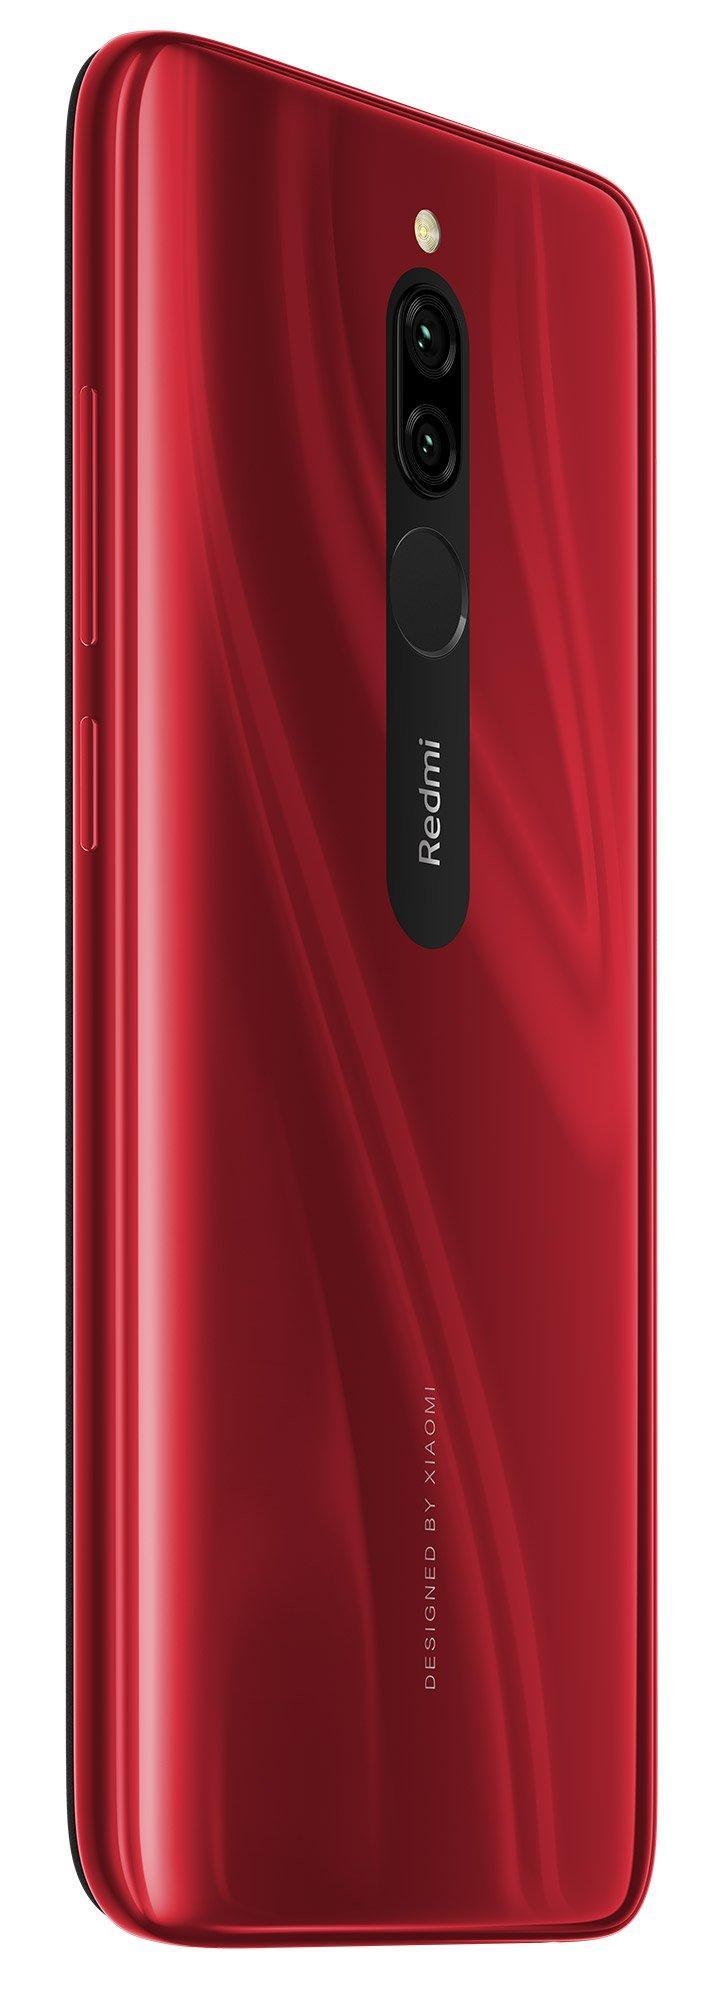 Купить Смартфон Xiaomi Redmi 8 4/64Gb Ruby Red